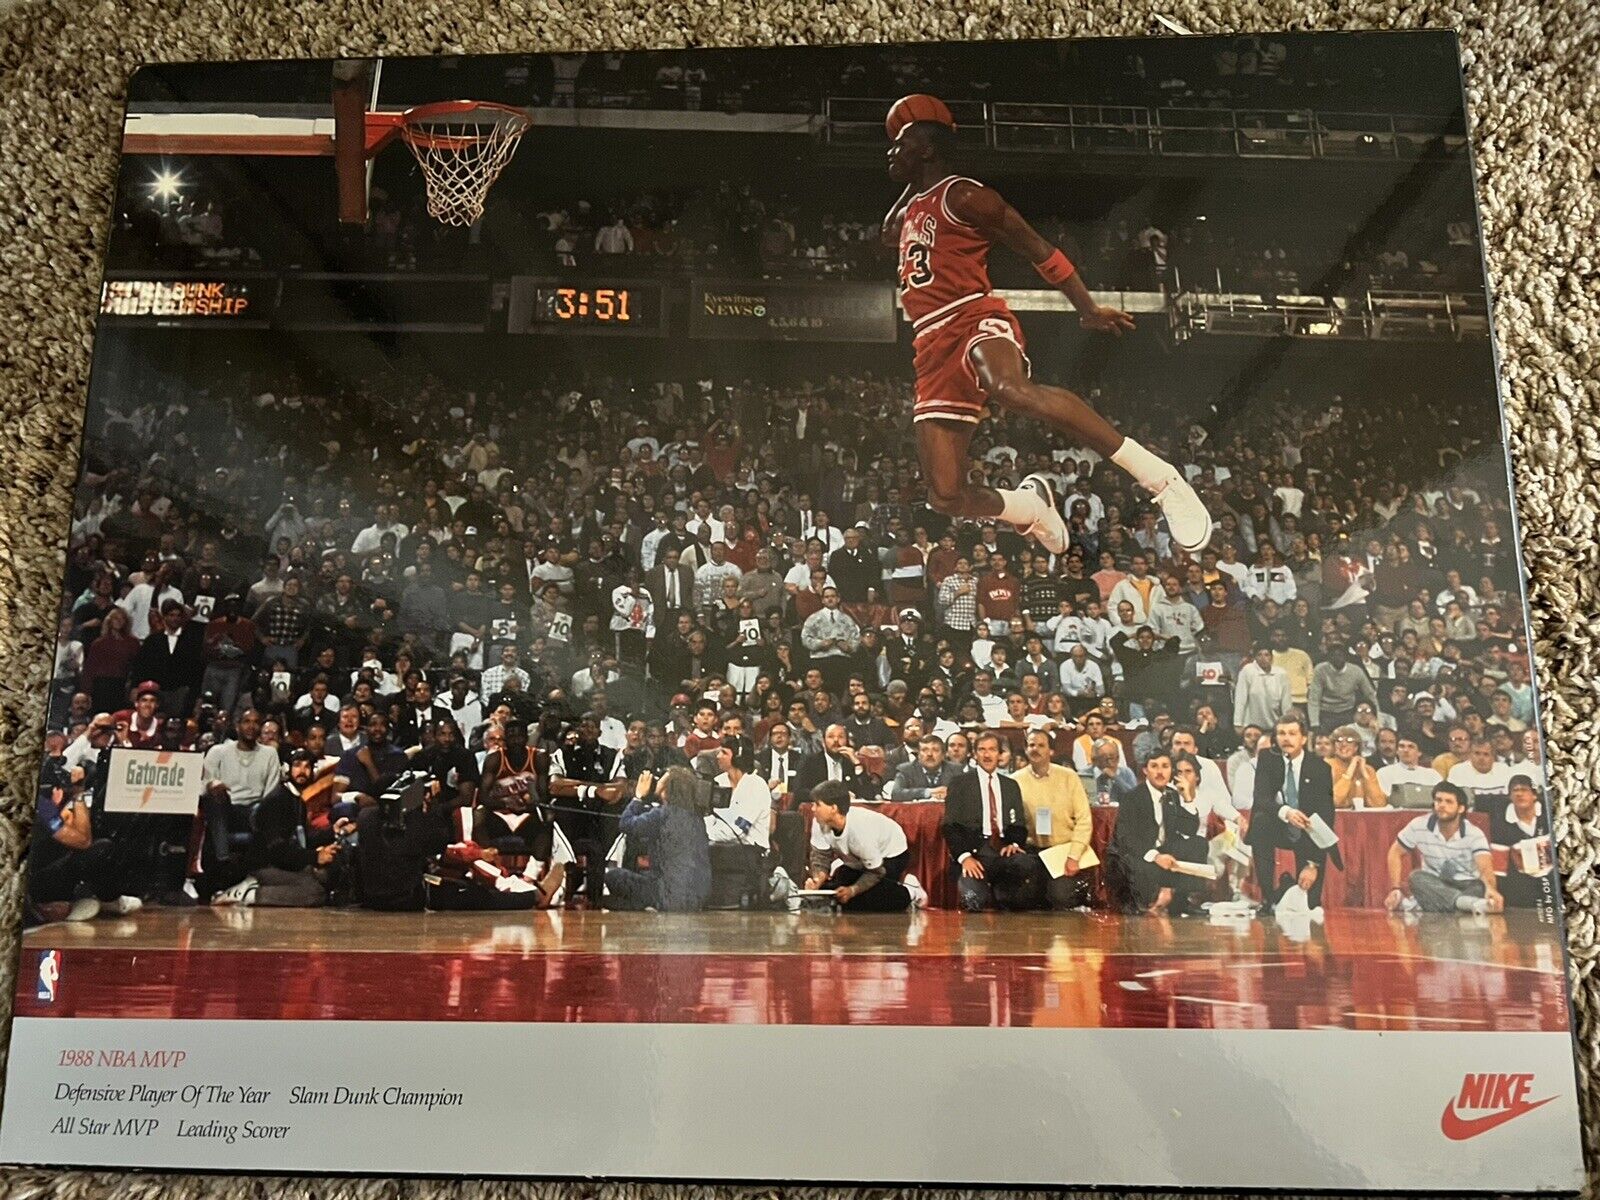 1988 NBA Nike advertisement Michael Jordan dunk contest free throw Plaque 1/1 Eb